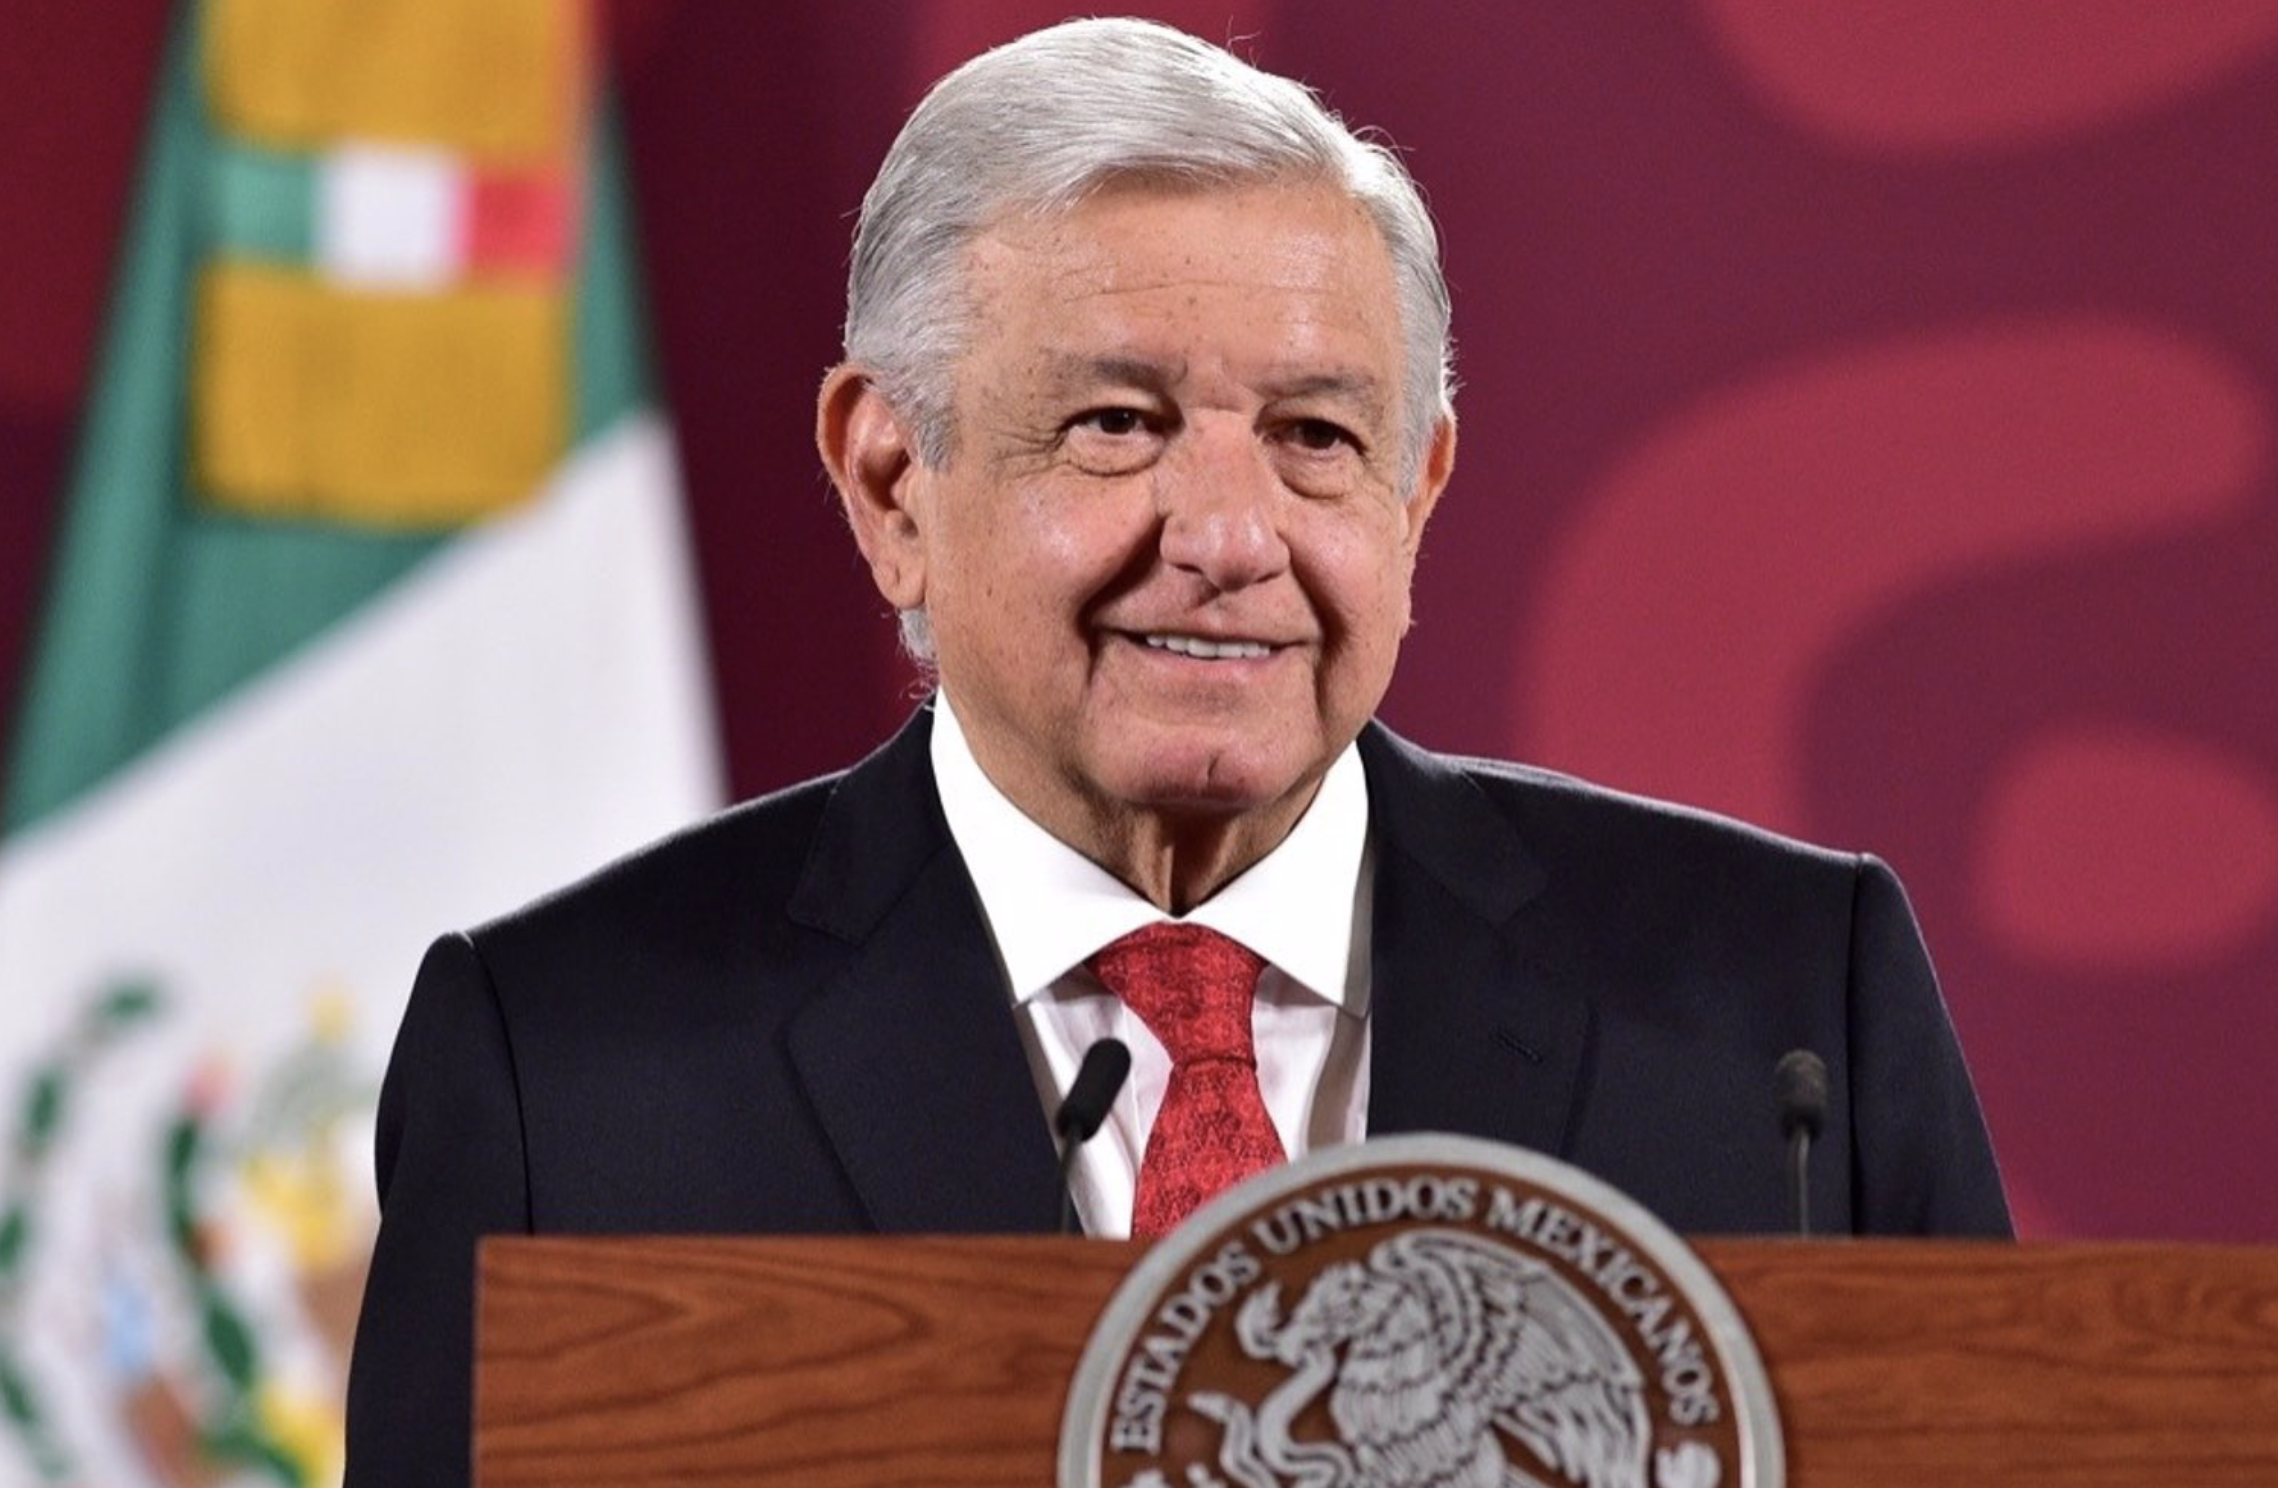 Andrés Manuel López Obrador, en una imagen del Gobierno de México.